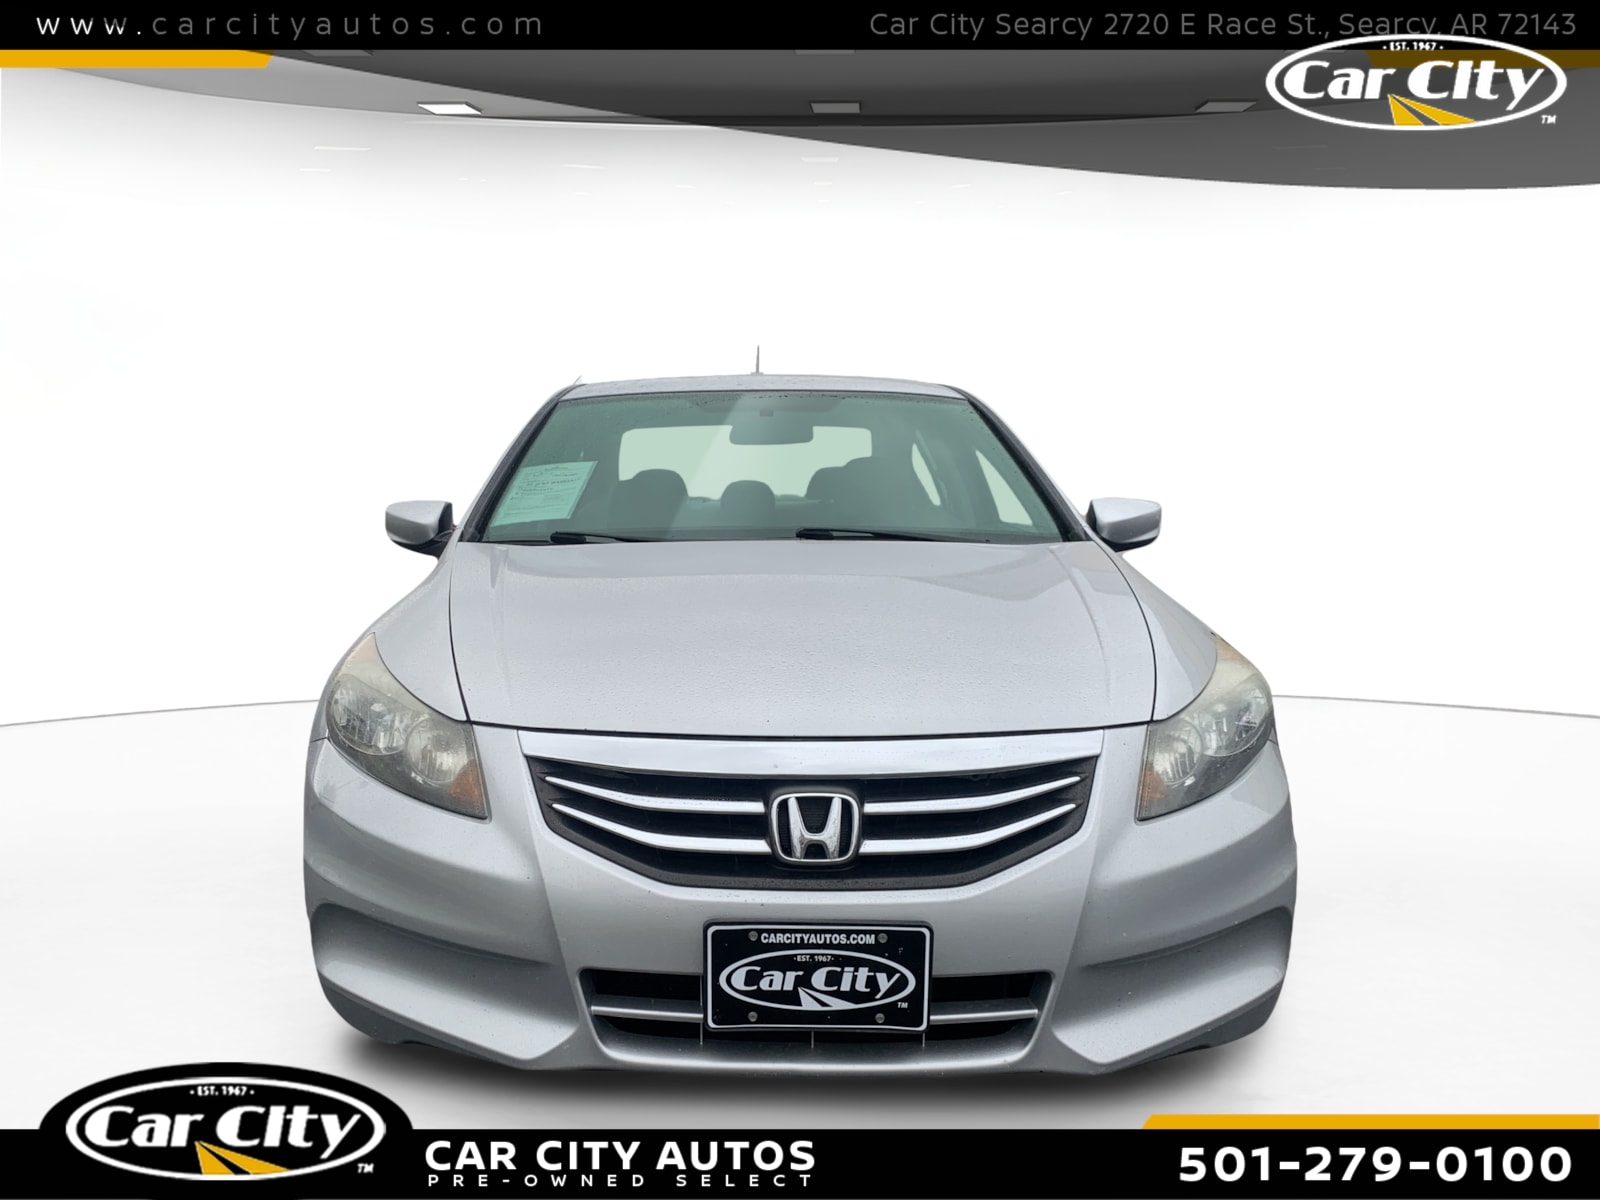 2012 Honda Accord LX Premium  - CA102290  - Car City Autos